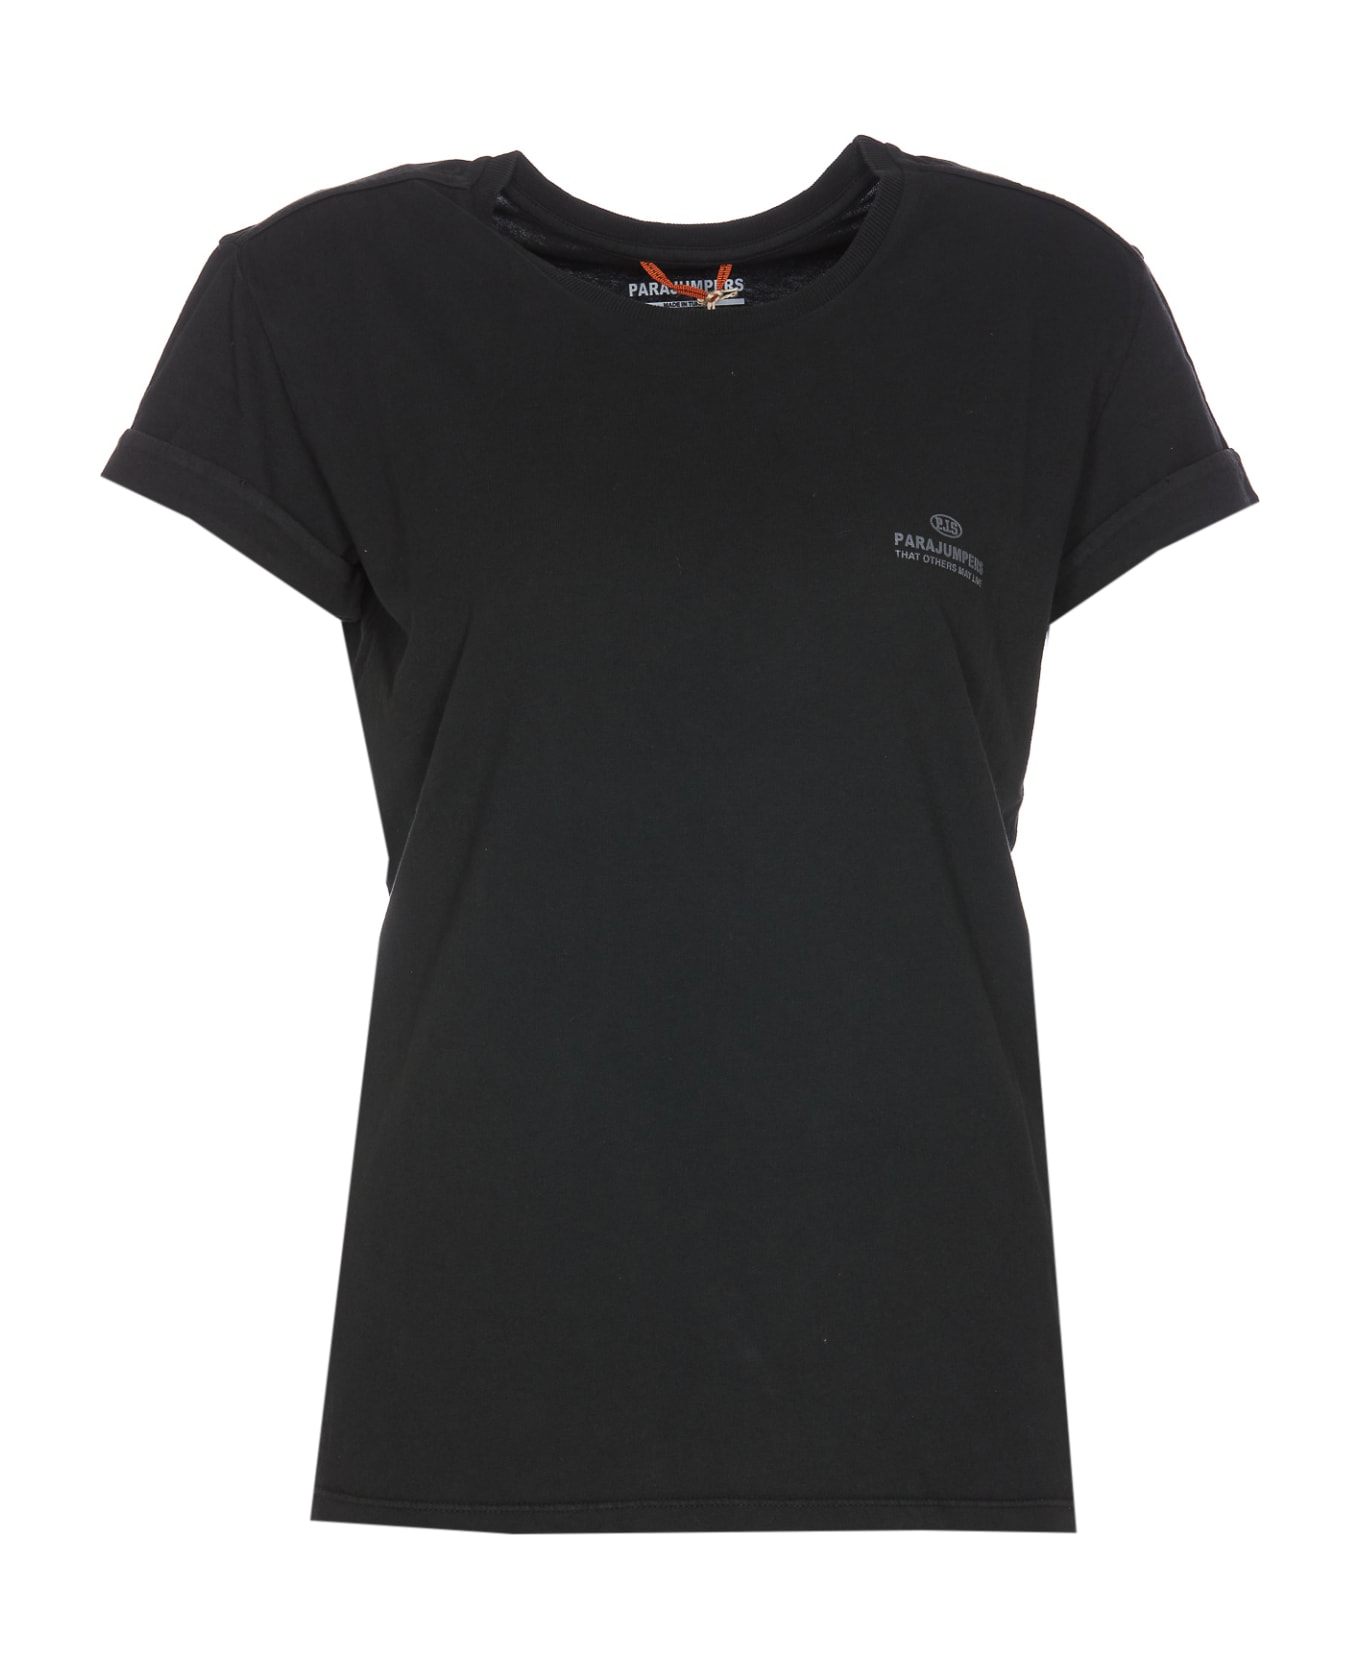 Parajumpers Myra T-shirt - Black Tシャツ